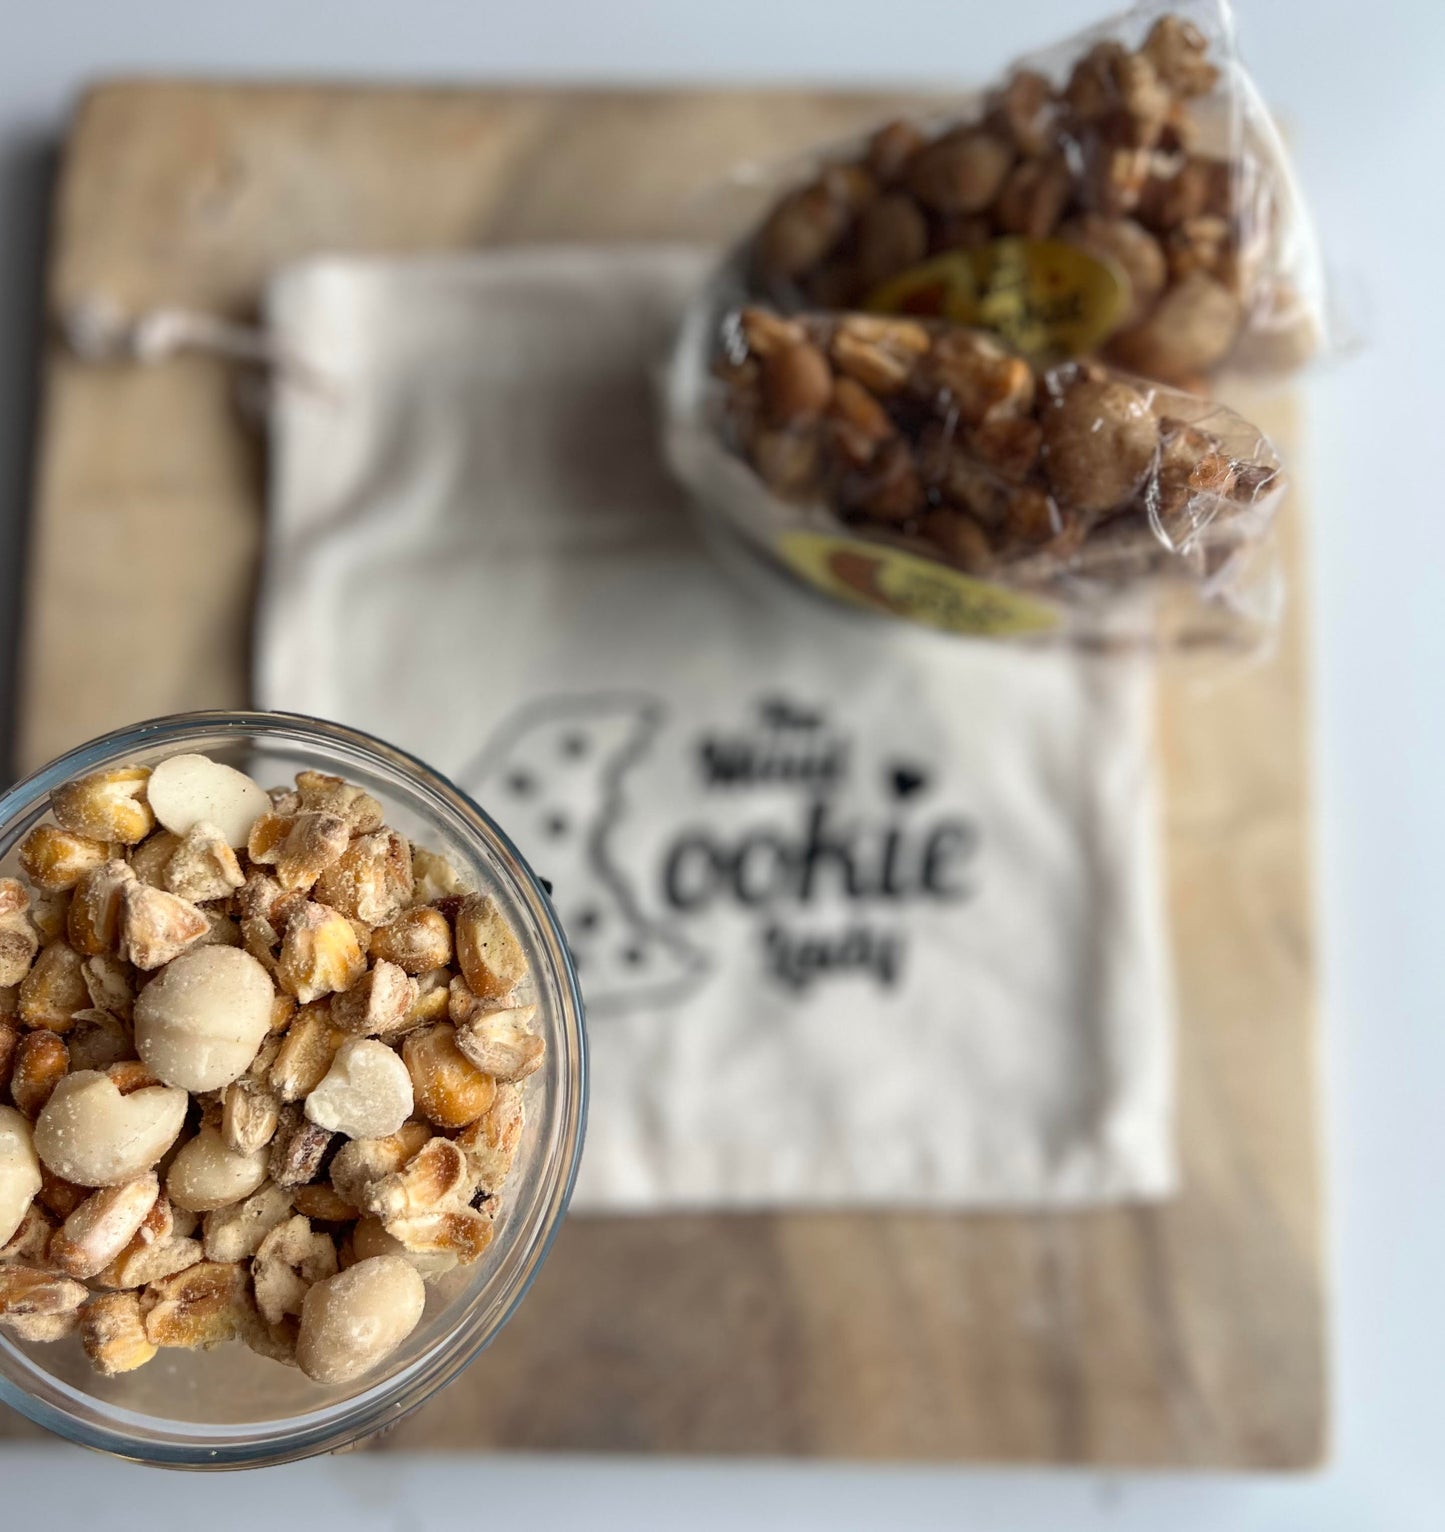 Truffle Parmesan Cheese Macadamia Nut/Corn Mix with Reusable Logo Canvas Bag